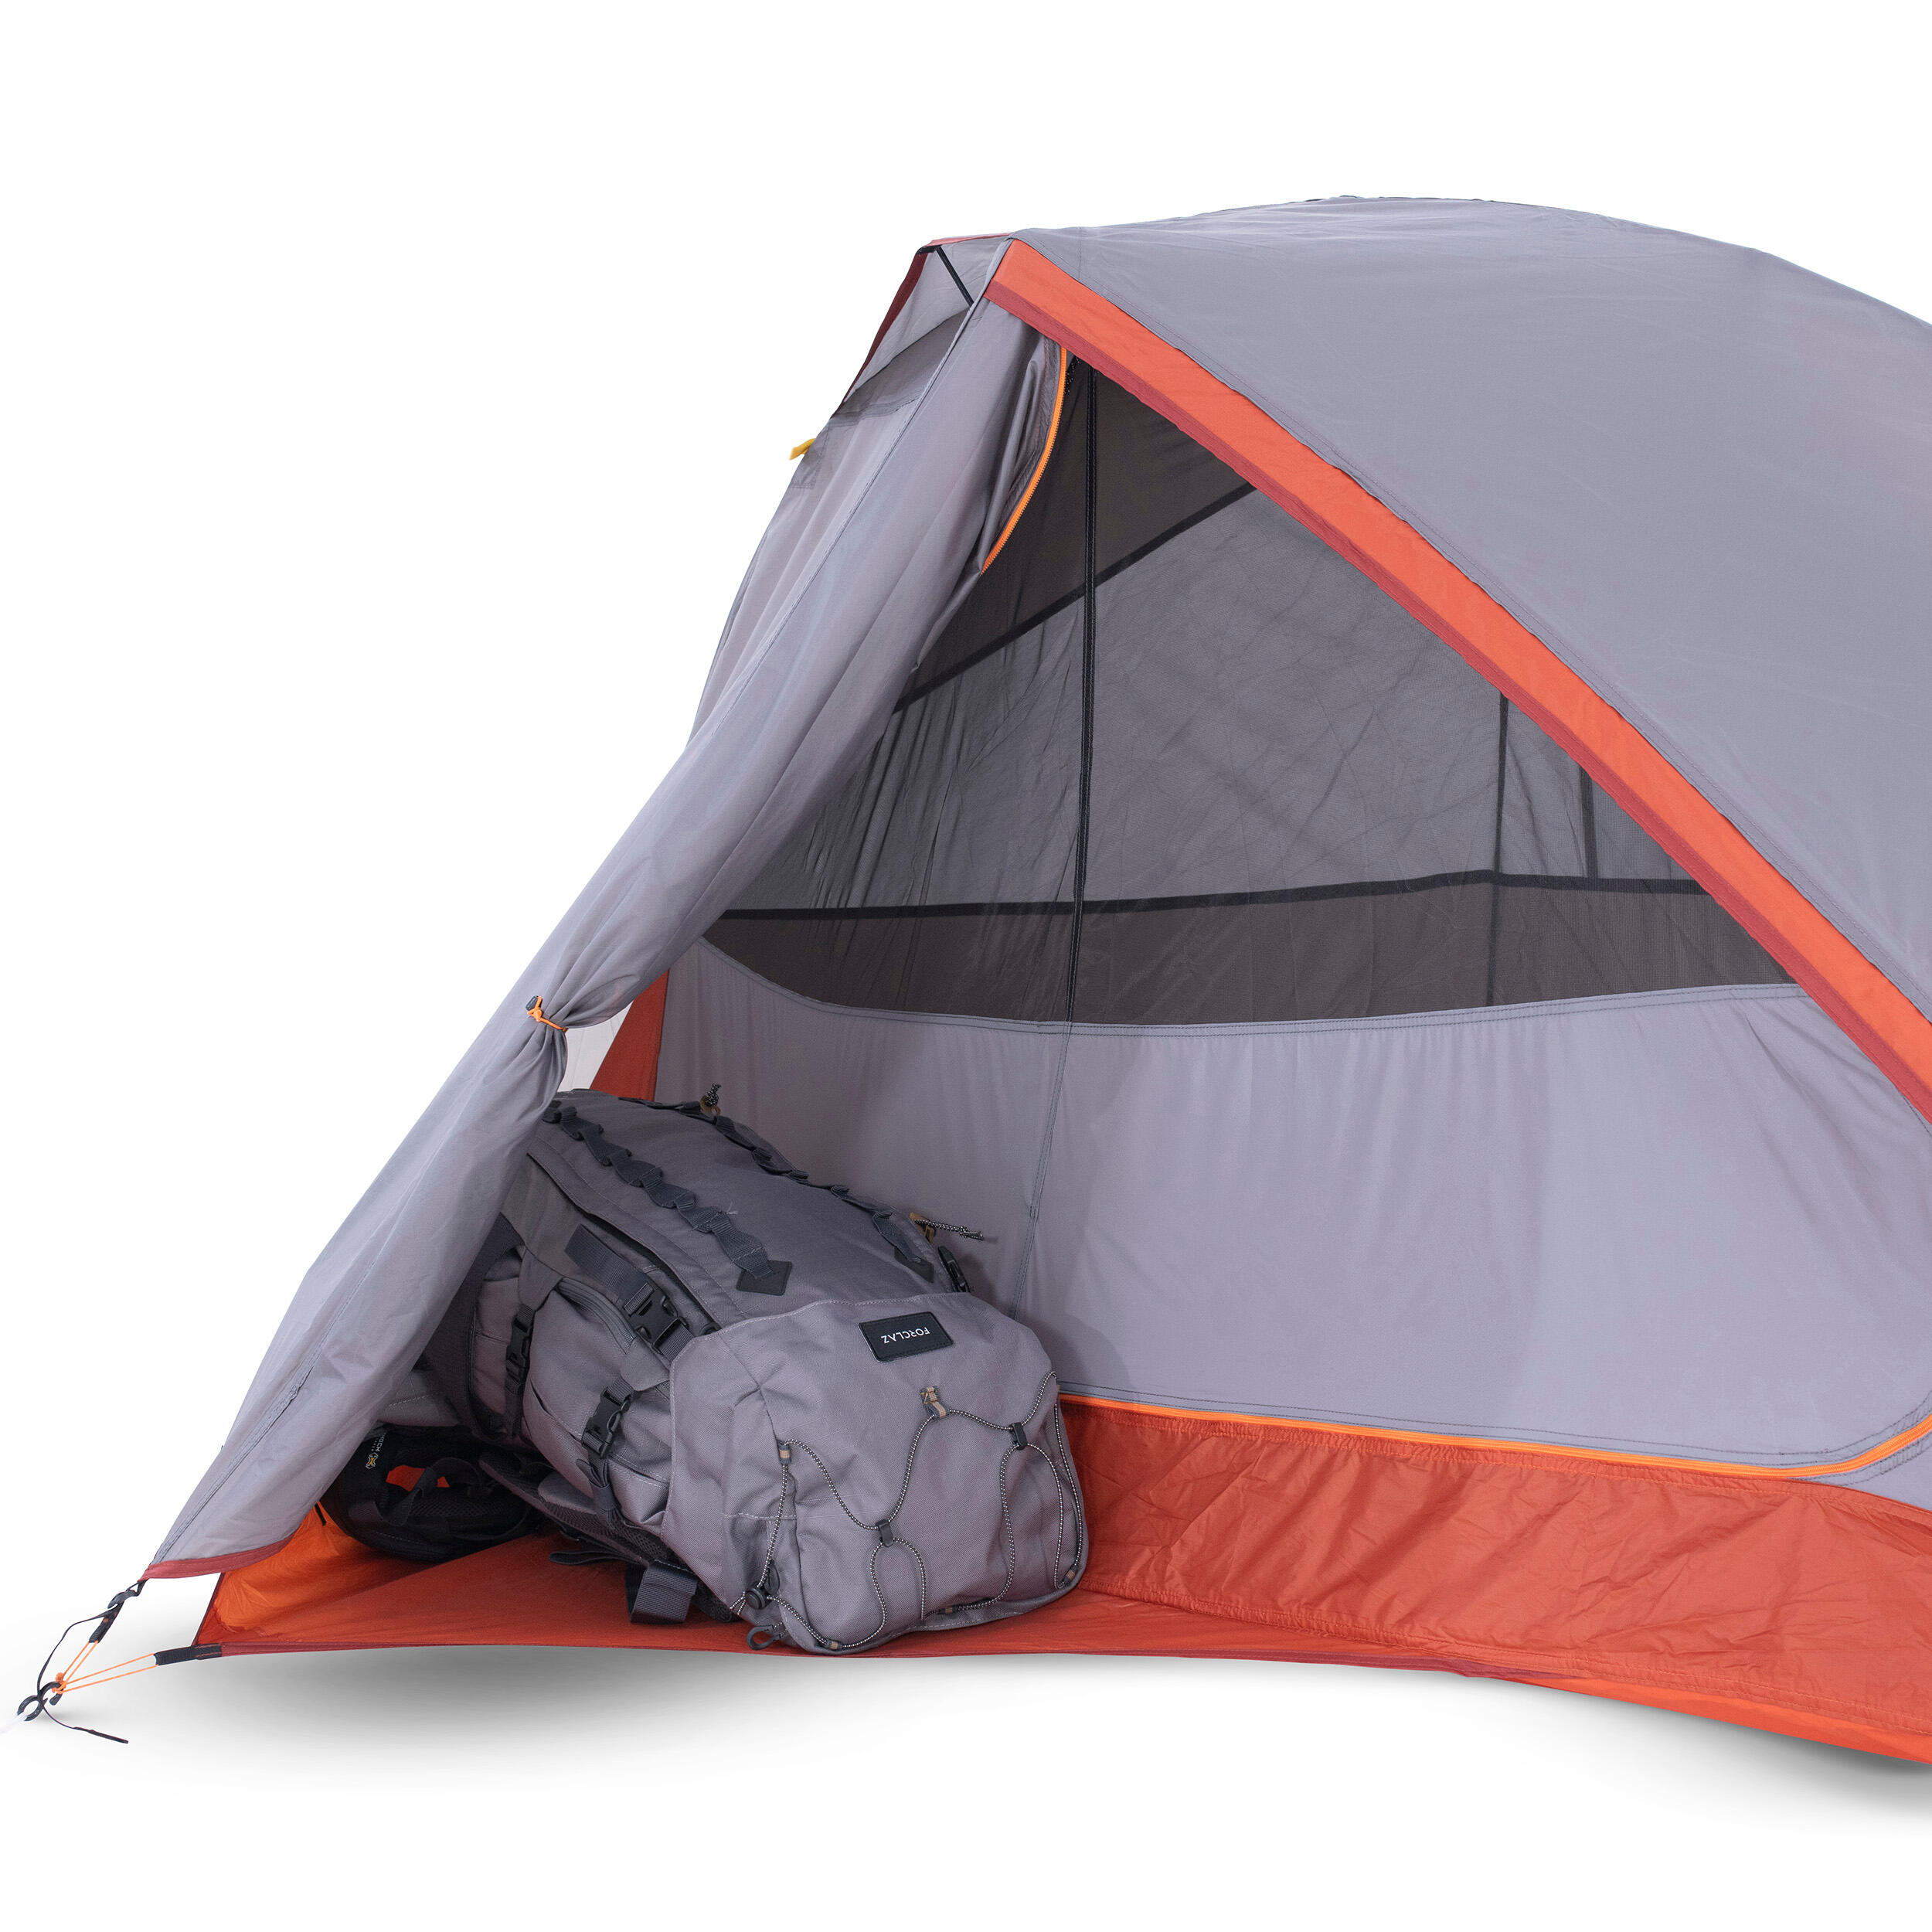 Trekking dome tent - 1-person - MT900 7/14